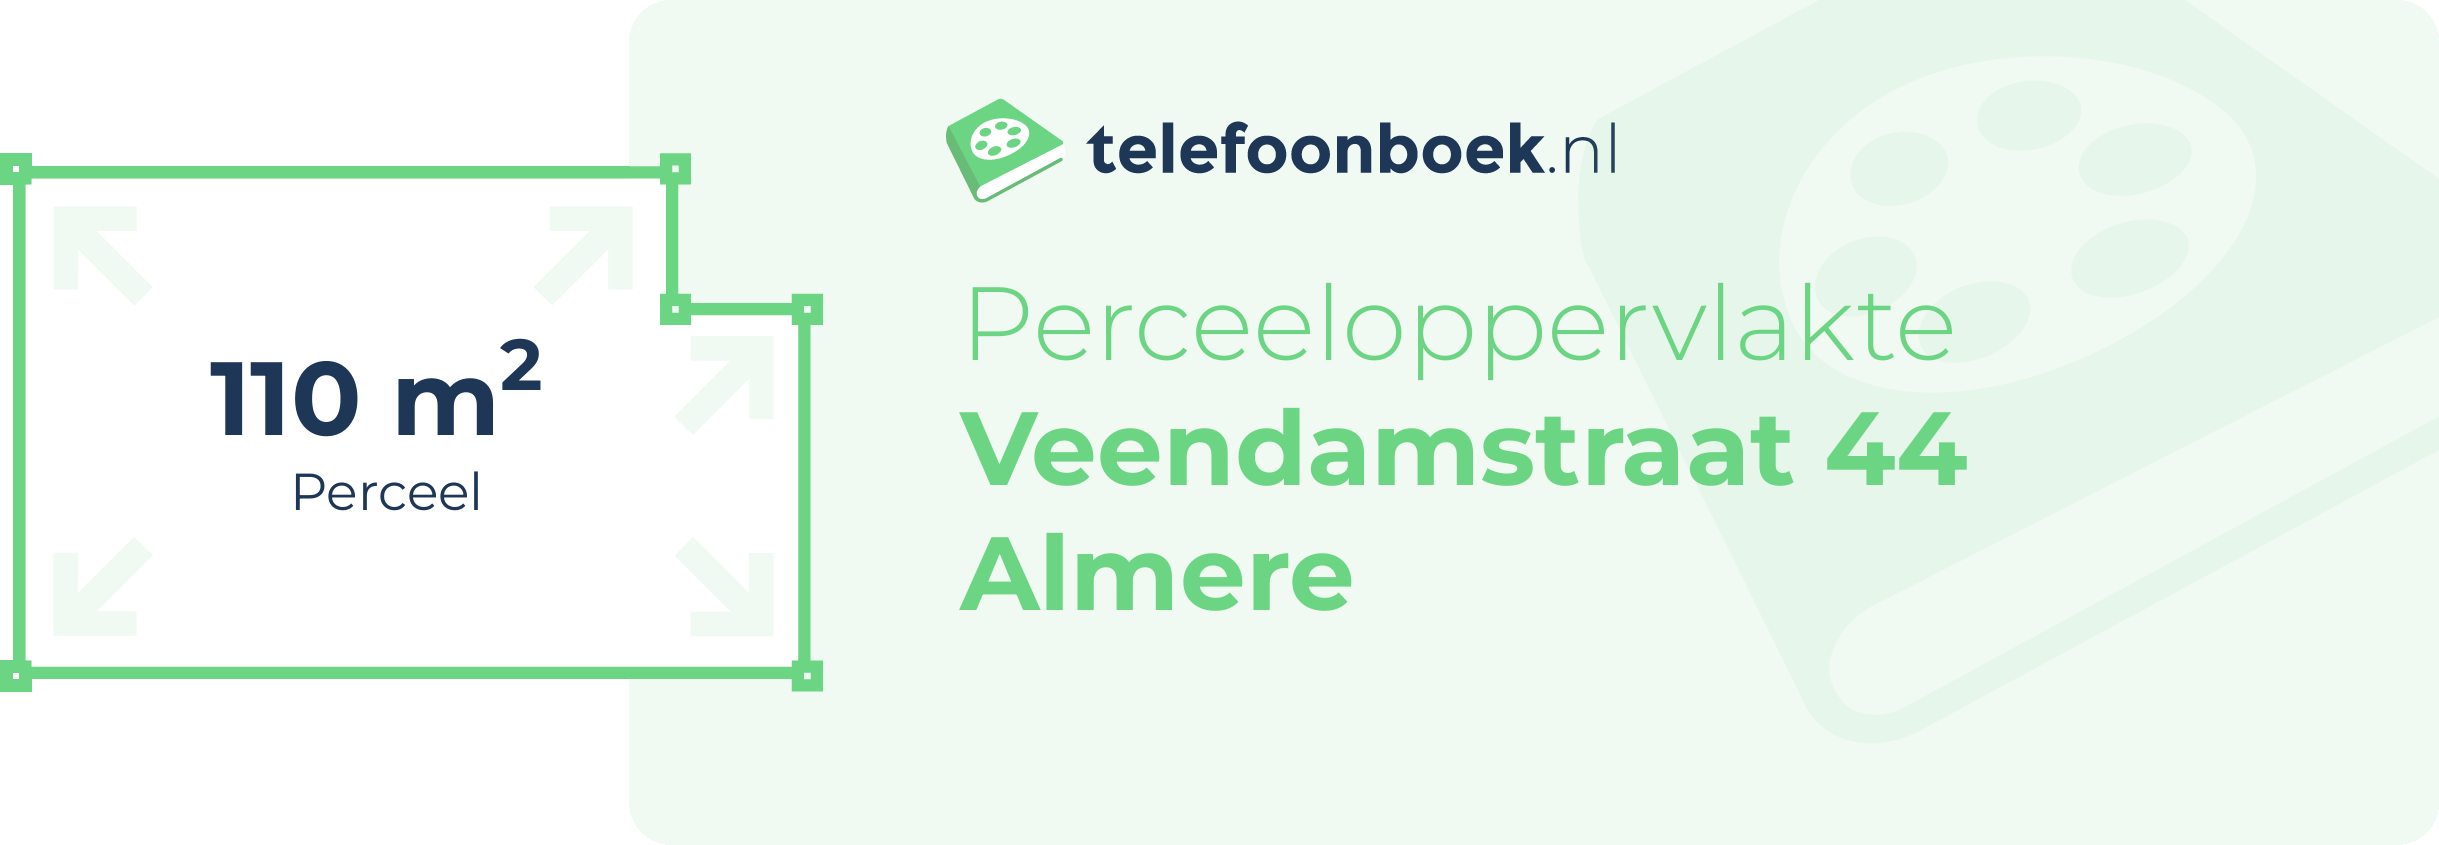 Perceeloppervlakte Veendamstraat 44 Almere